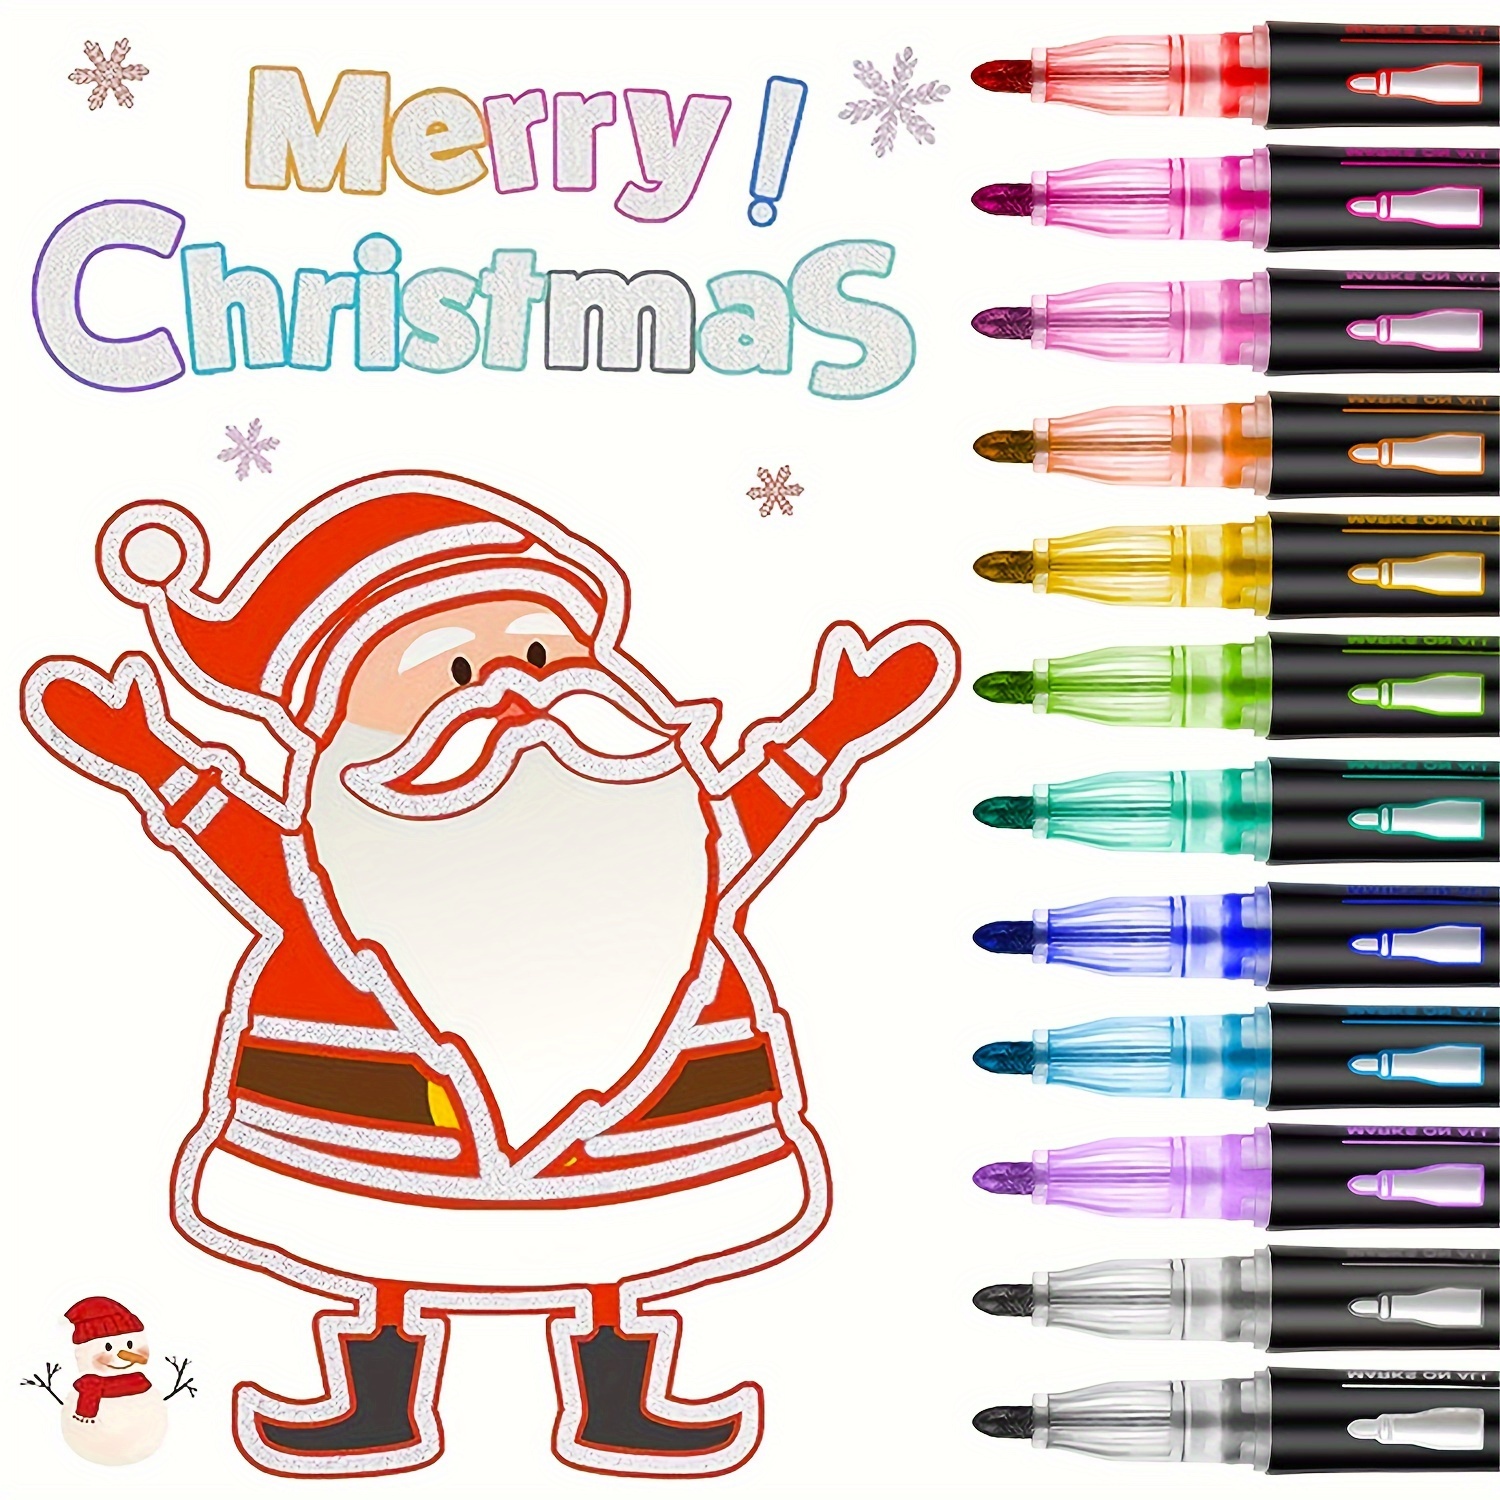 Shimmer Outline Markers, 24 Colors Double Line Metallic Pen Set Sparkle  Self-Outline Doodle Marker Cool Magic Silver Glitter Dazzle Pen Card  Dazzlers